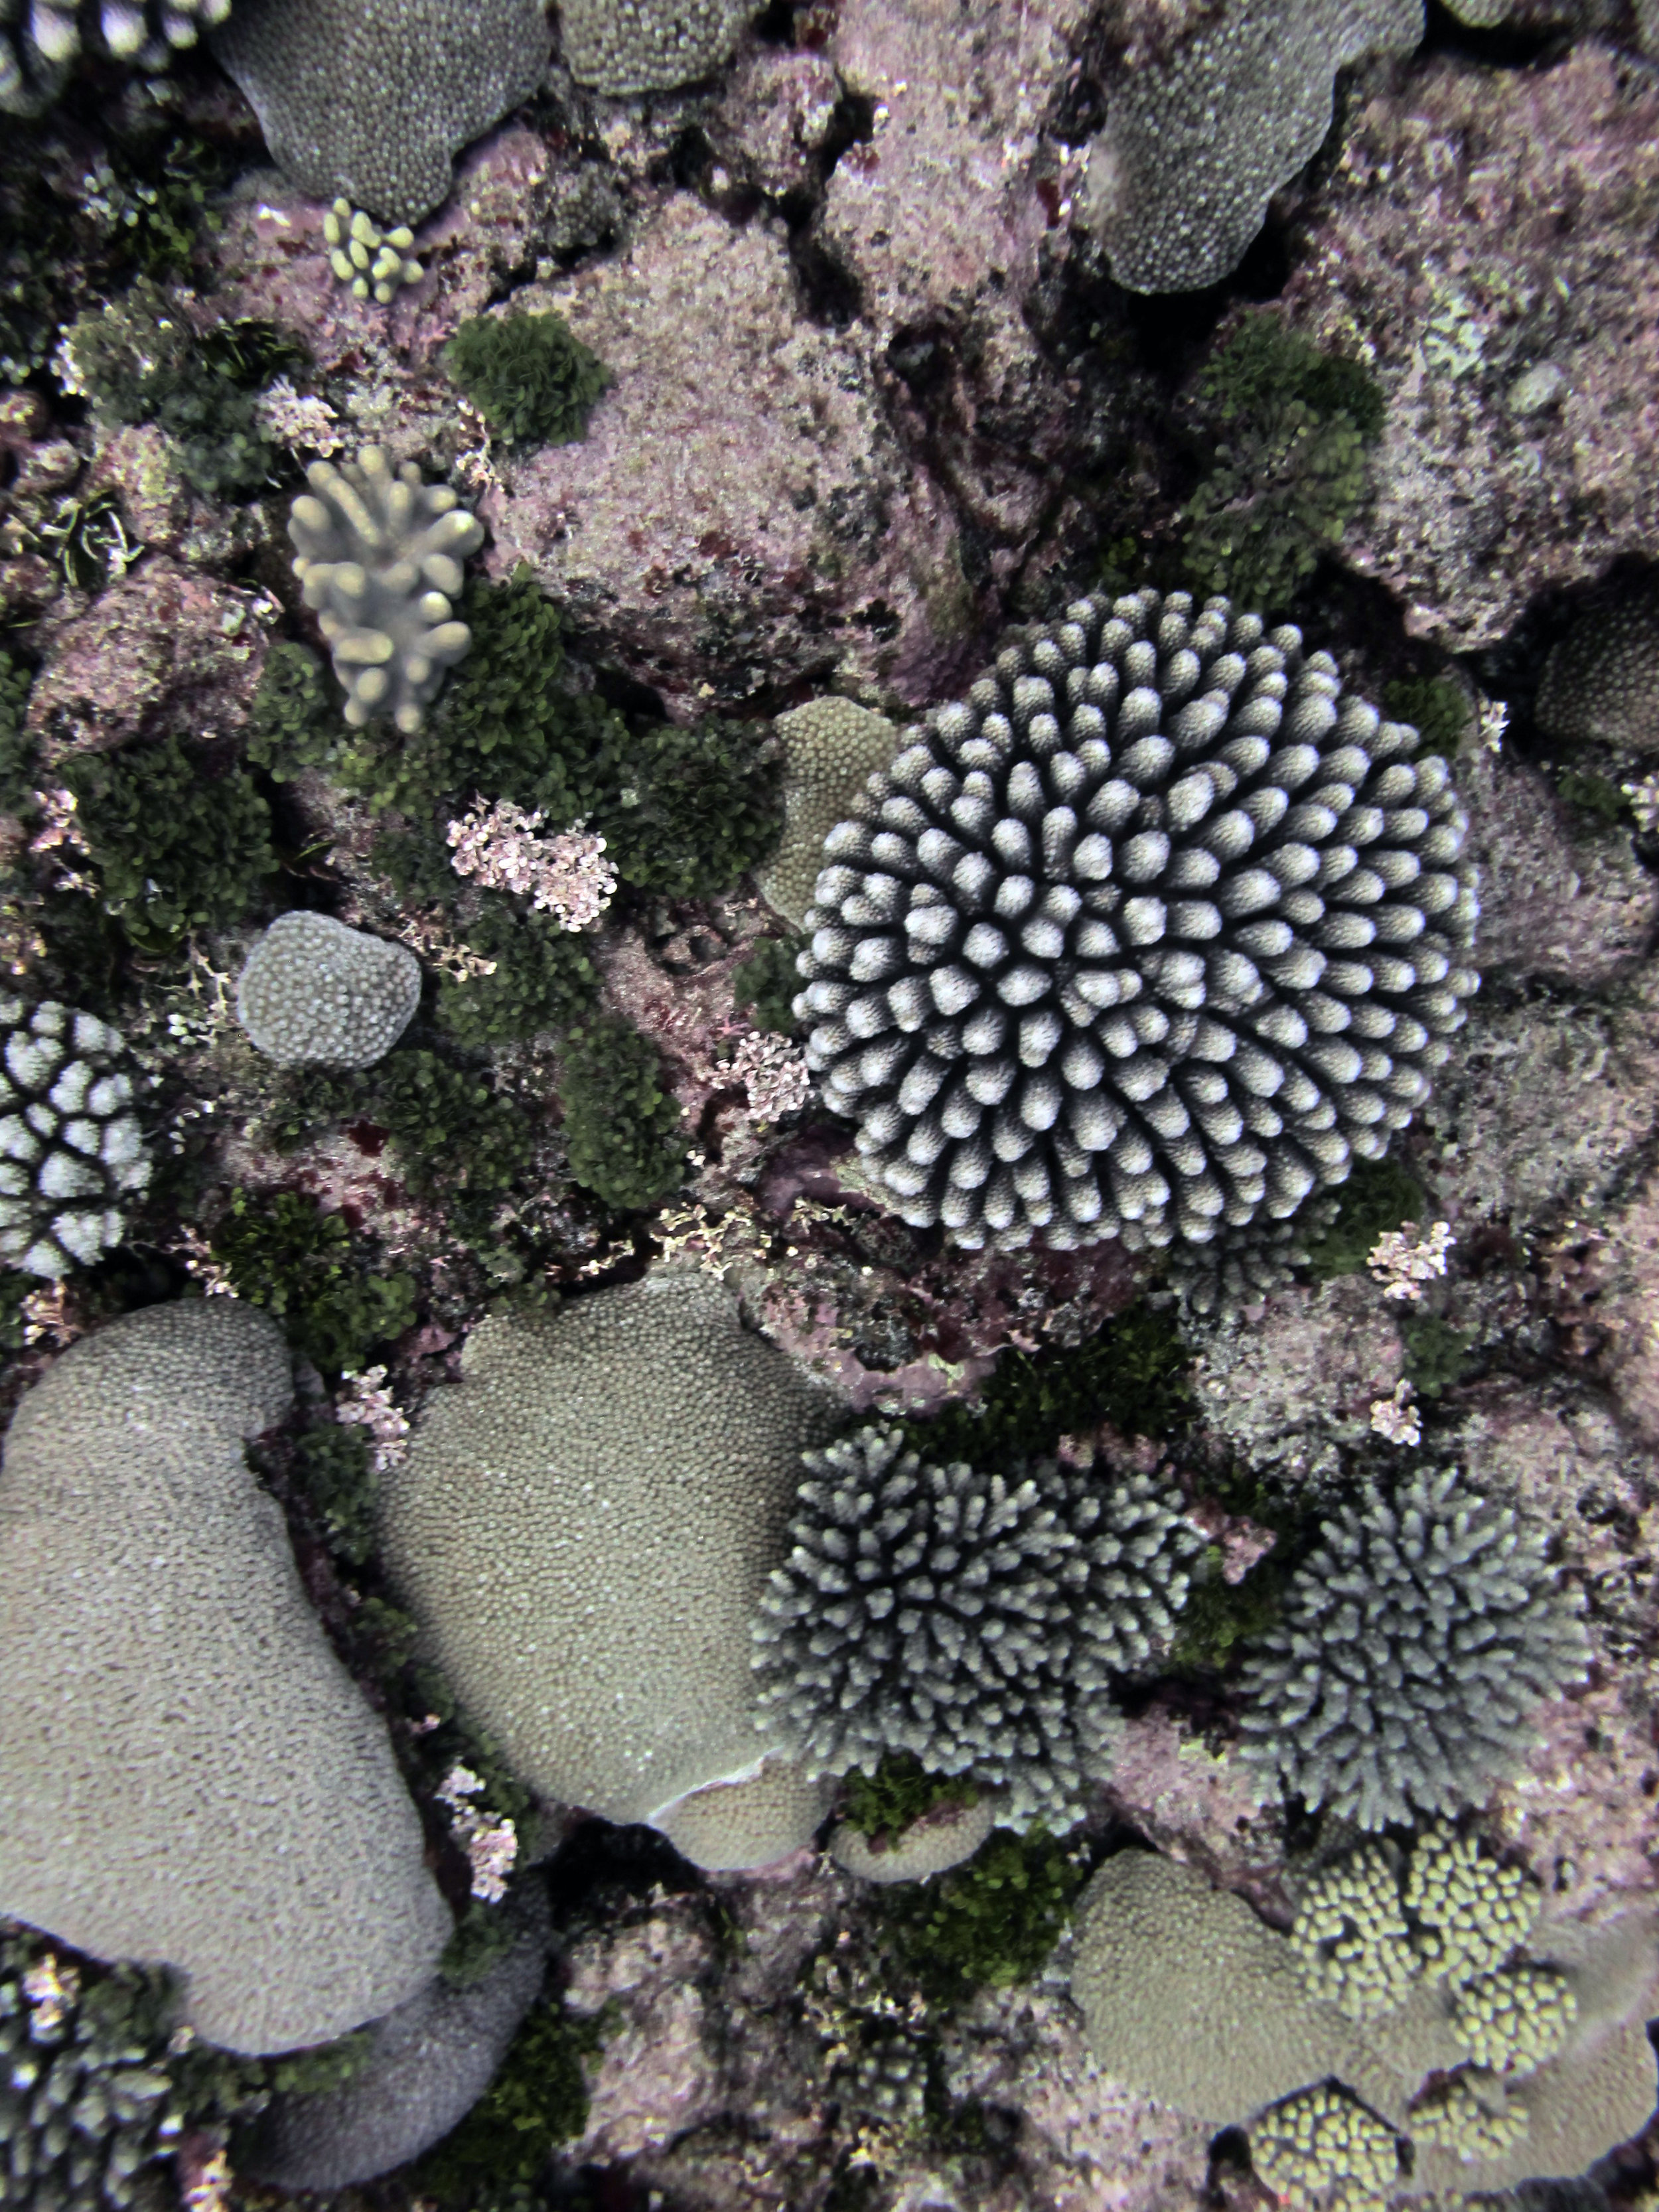 corals everwhere.jpg